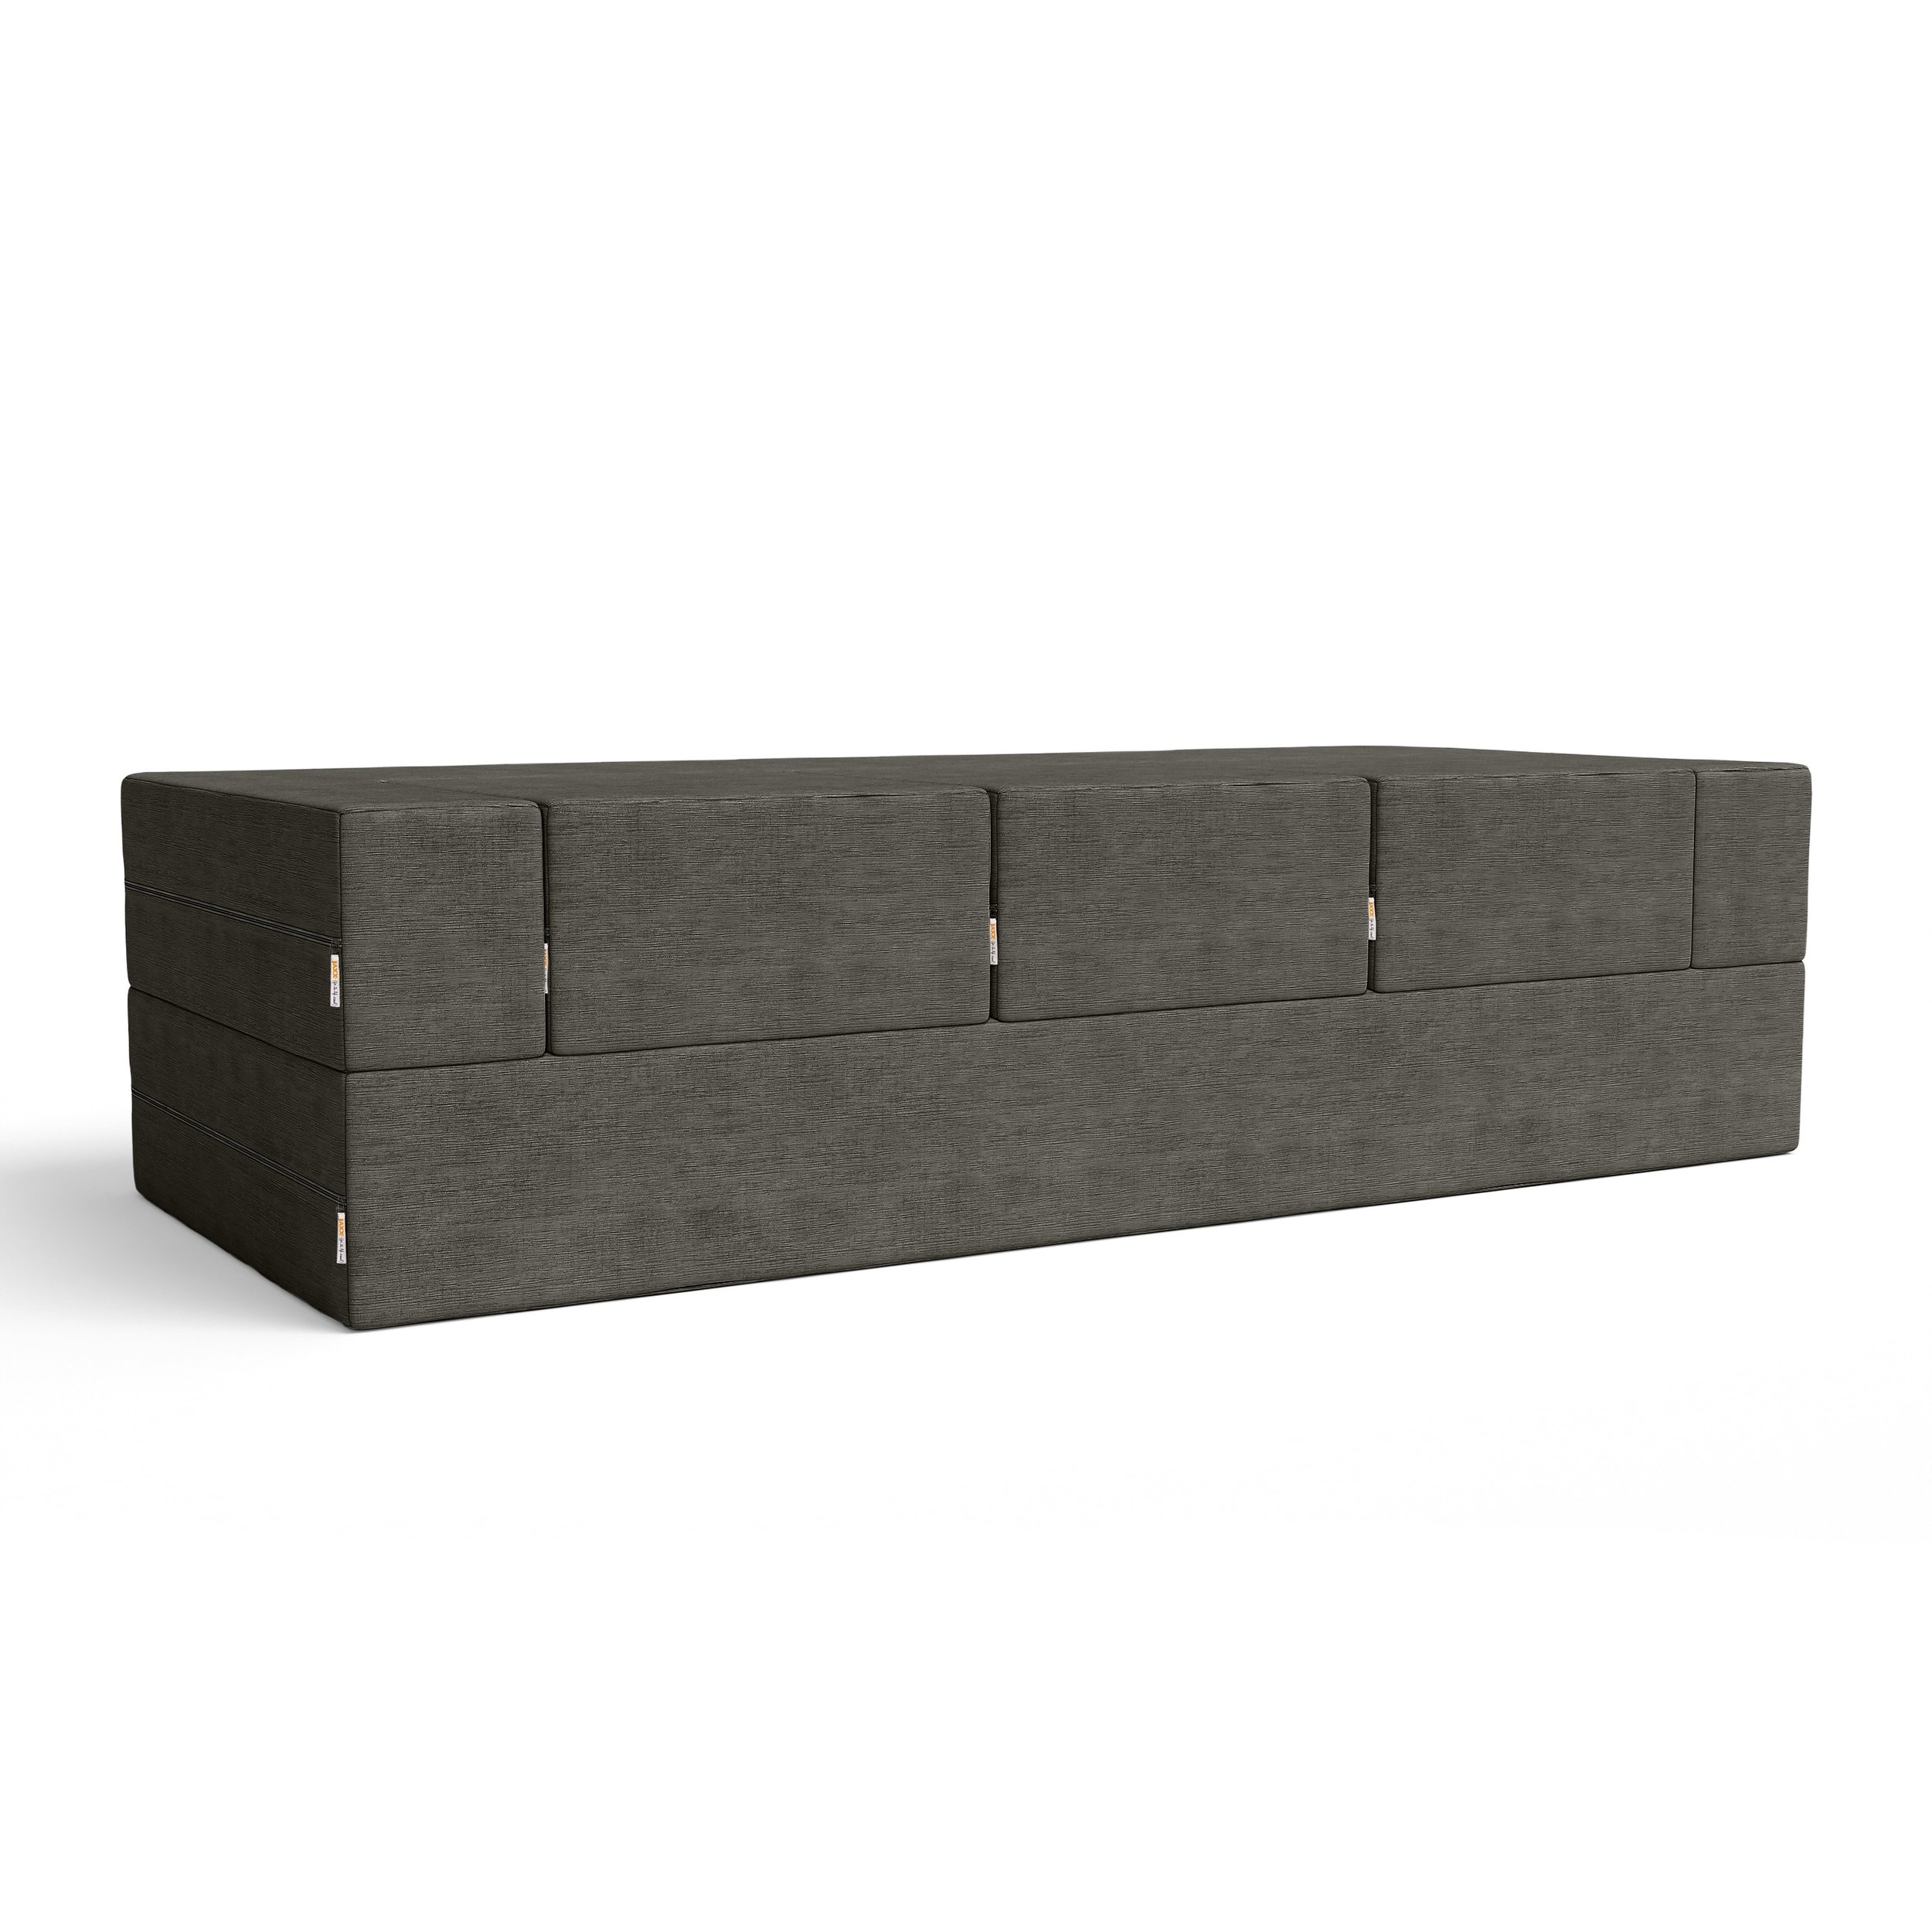 zipline-sofa-charcoal-stackedposition-3000x3000.jpg